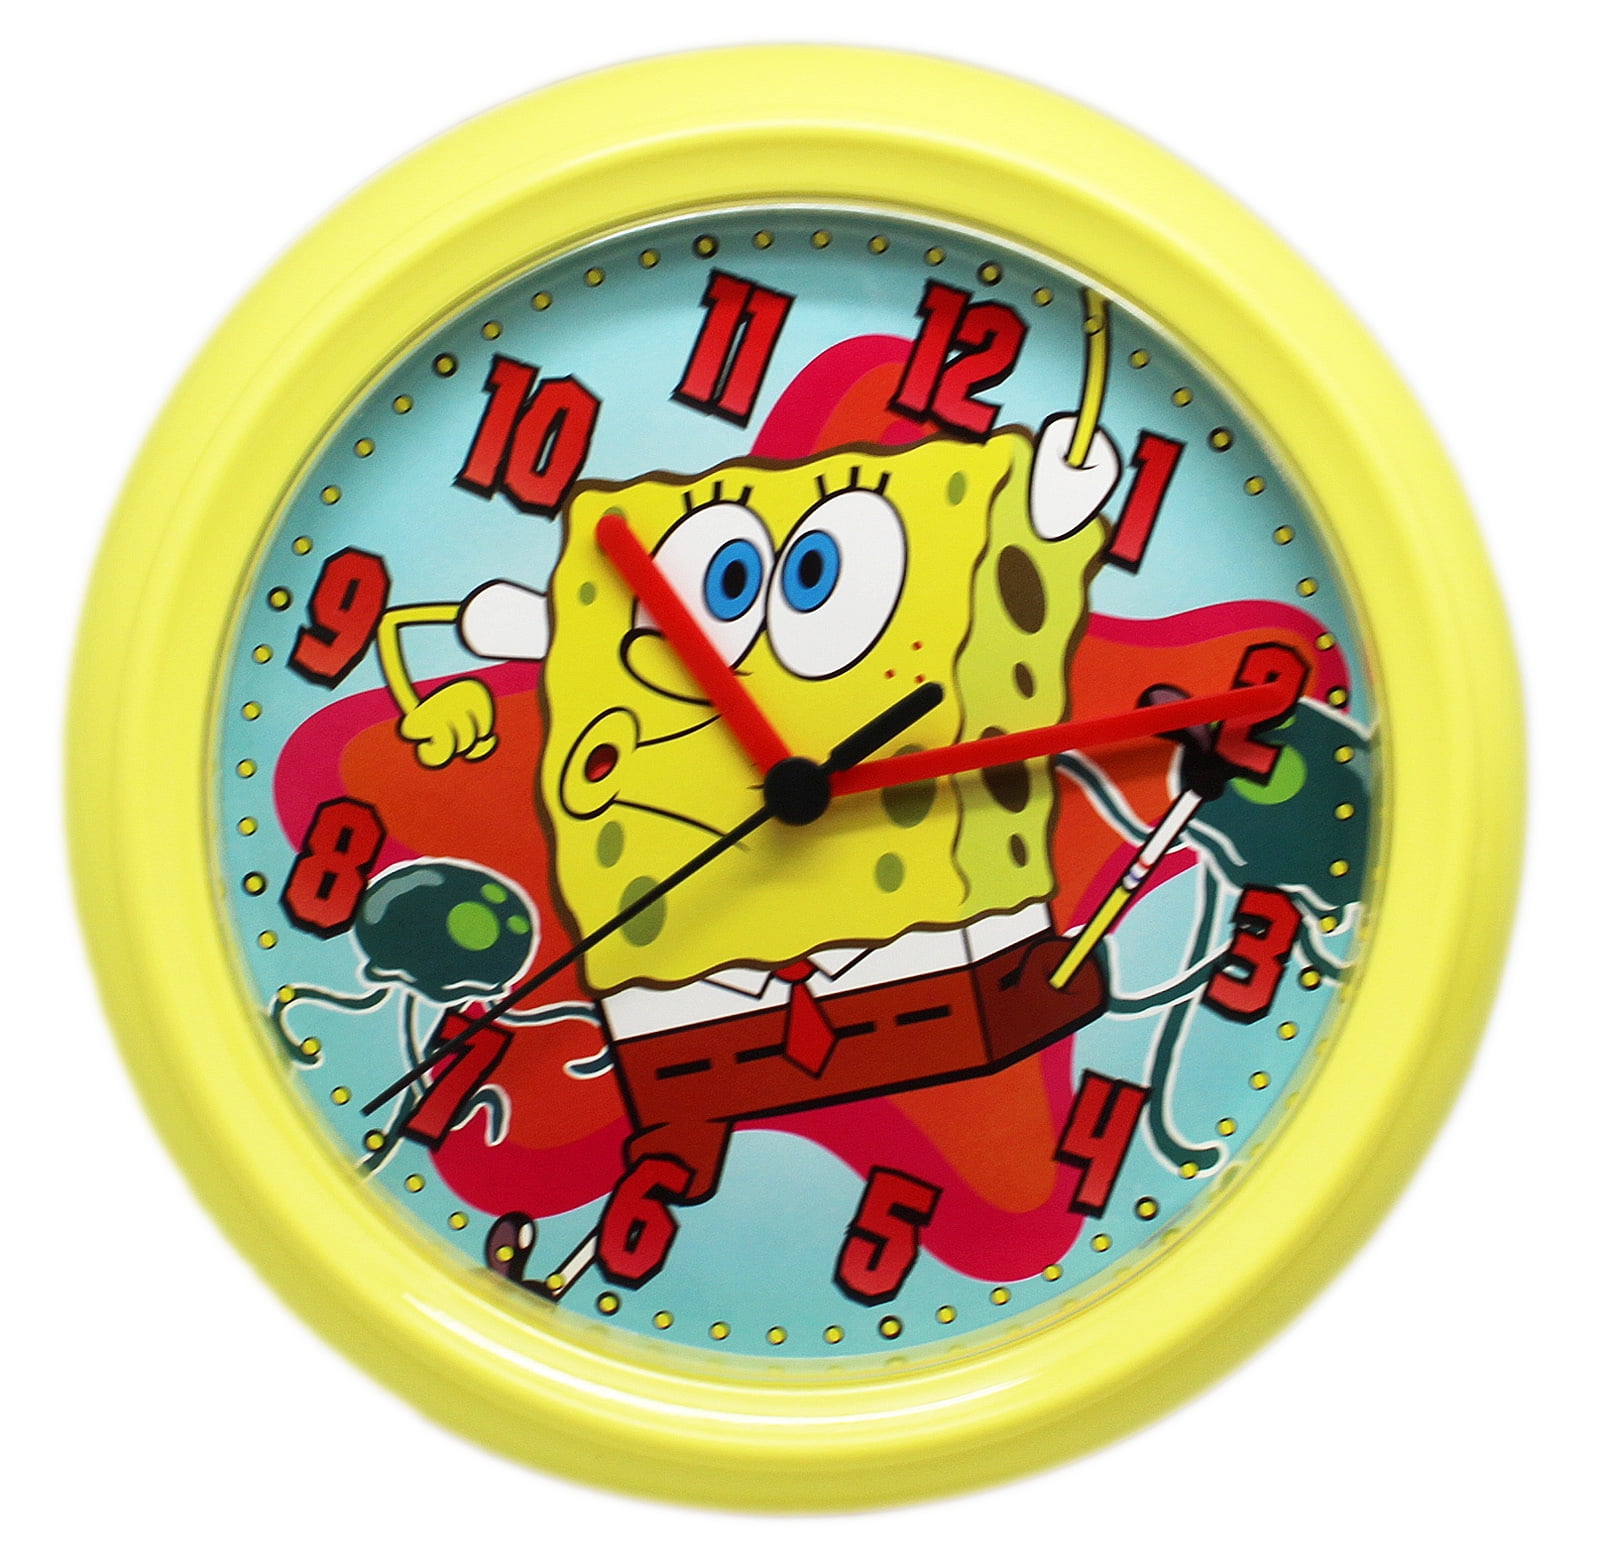 Spongebob SquarePant Patrick Star Digital Alarm Desktop Clock with 7 Changing LED Clock Colorful Toys for Kids Style 1 